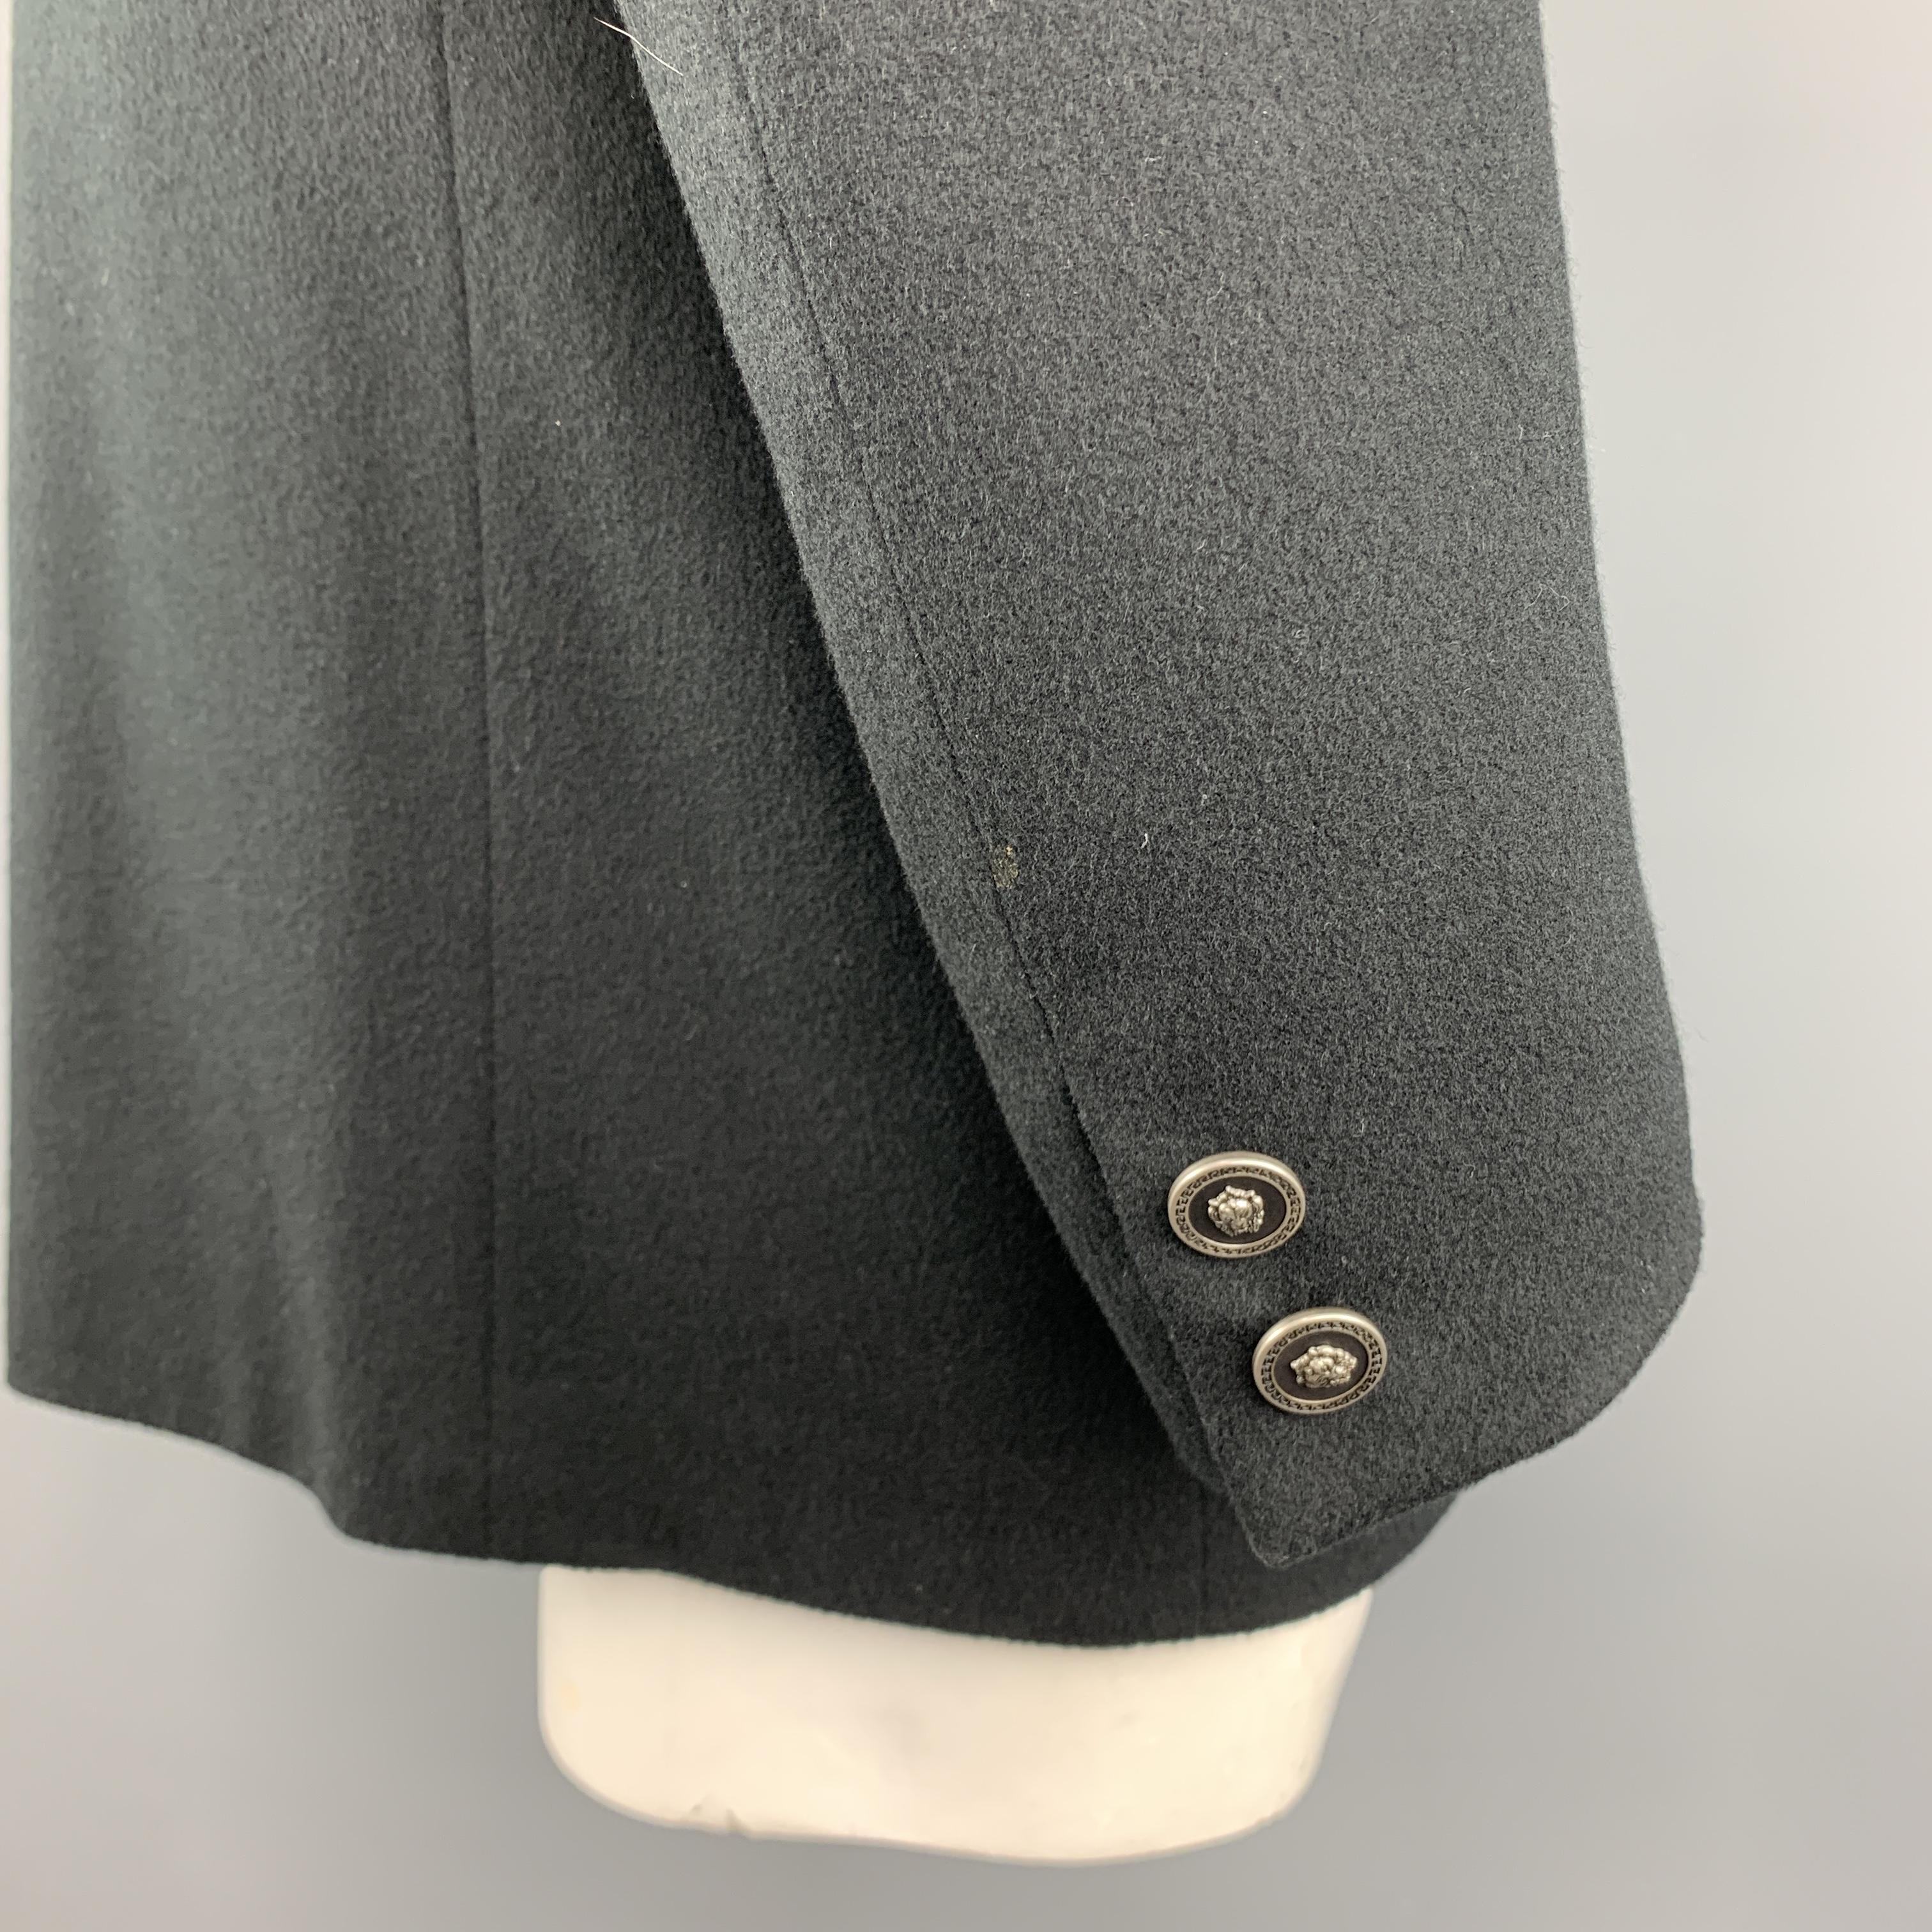 Vintage VERSUS by GIANNI VERSACE Size 42 Black Wool / Cashmere Sport Coat 1